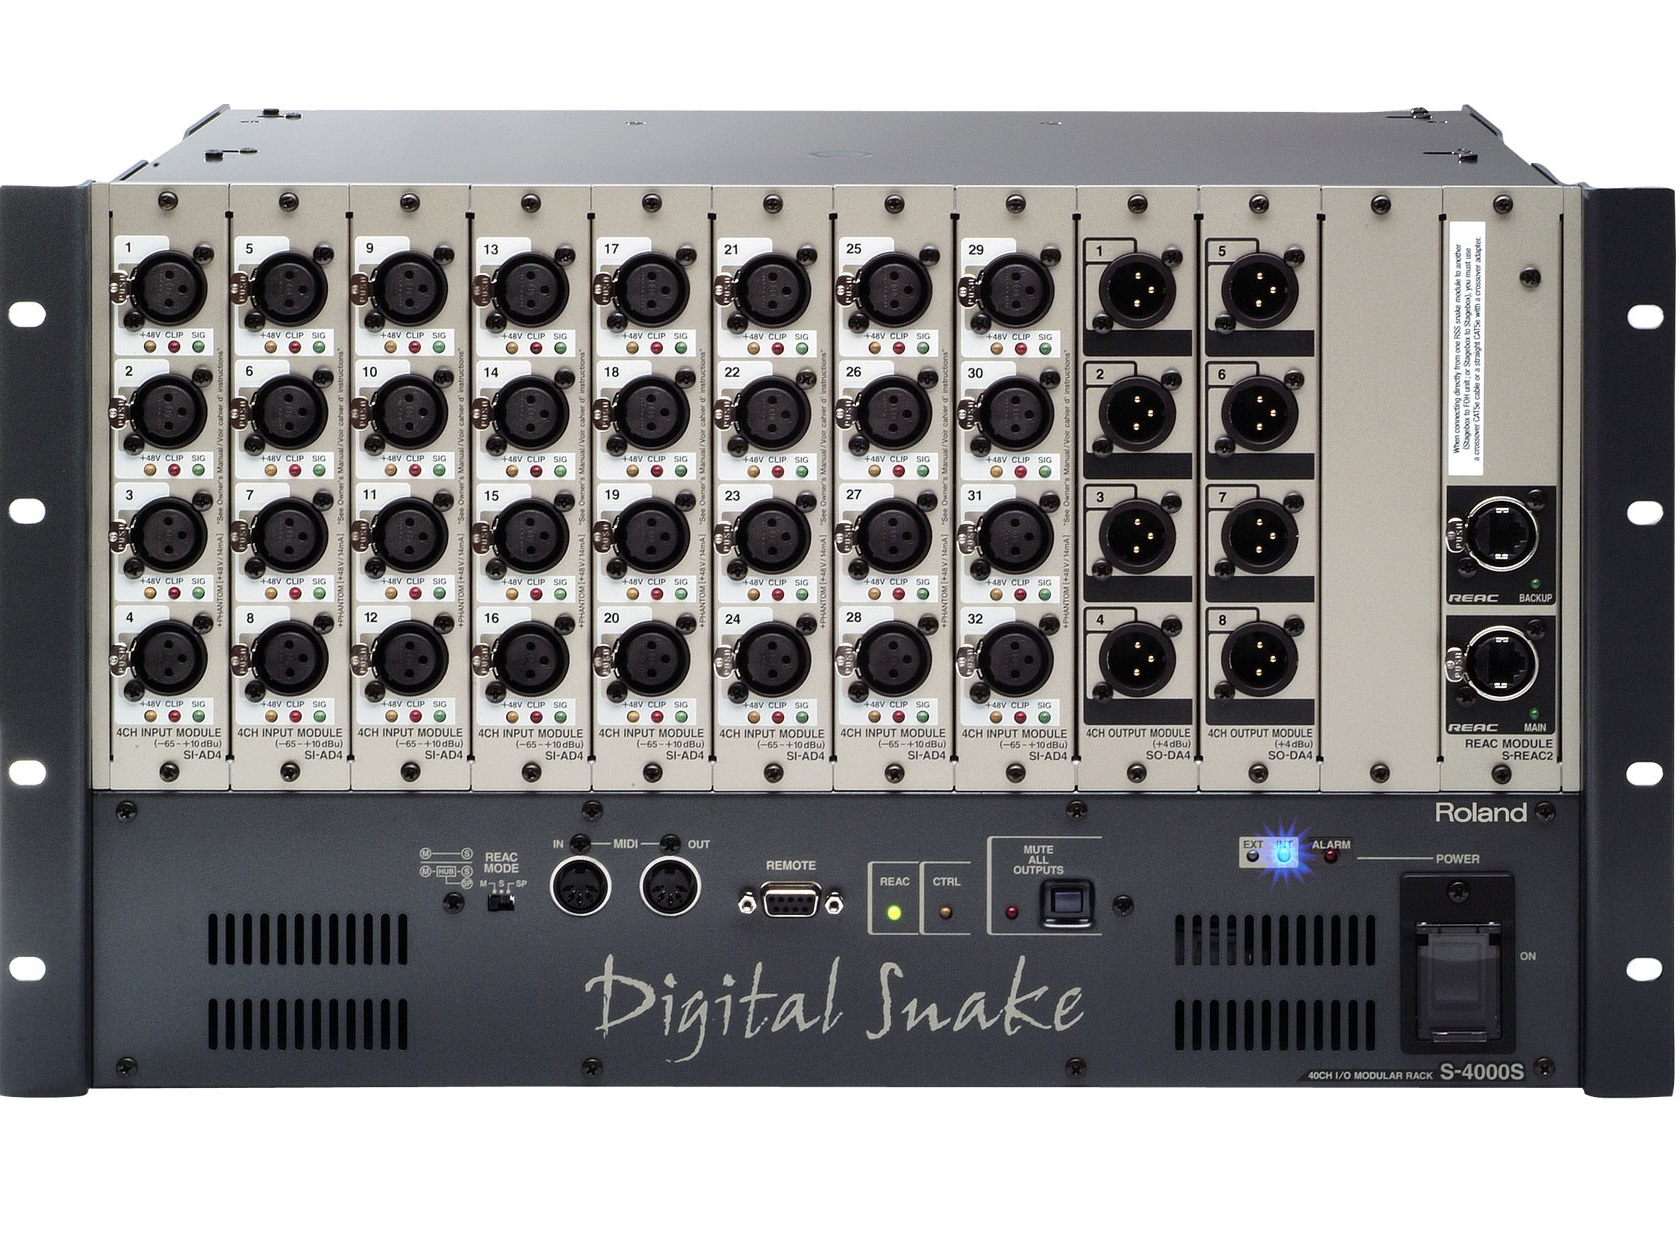 S-4000S-3208 32 input x 8 output Modular Rack Unit by Roland